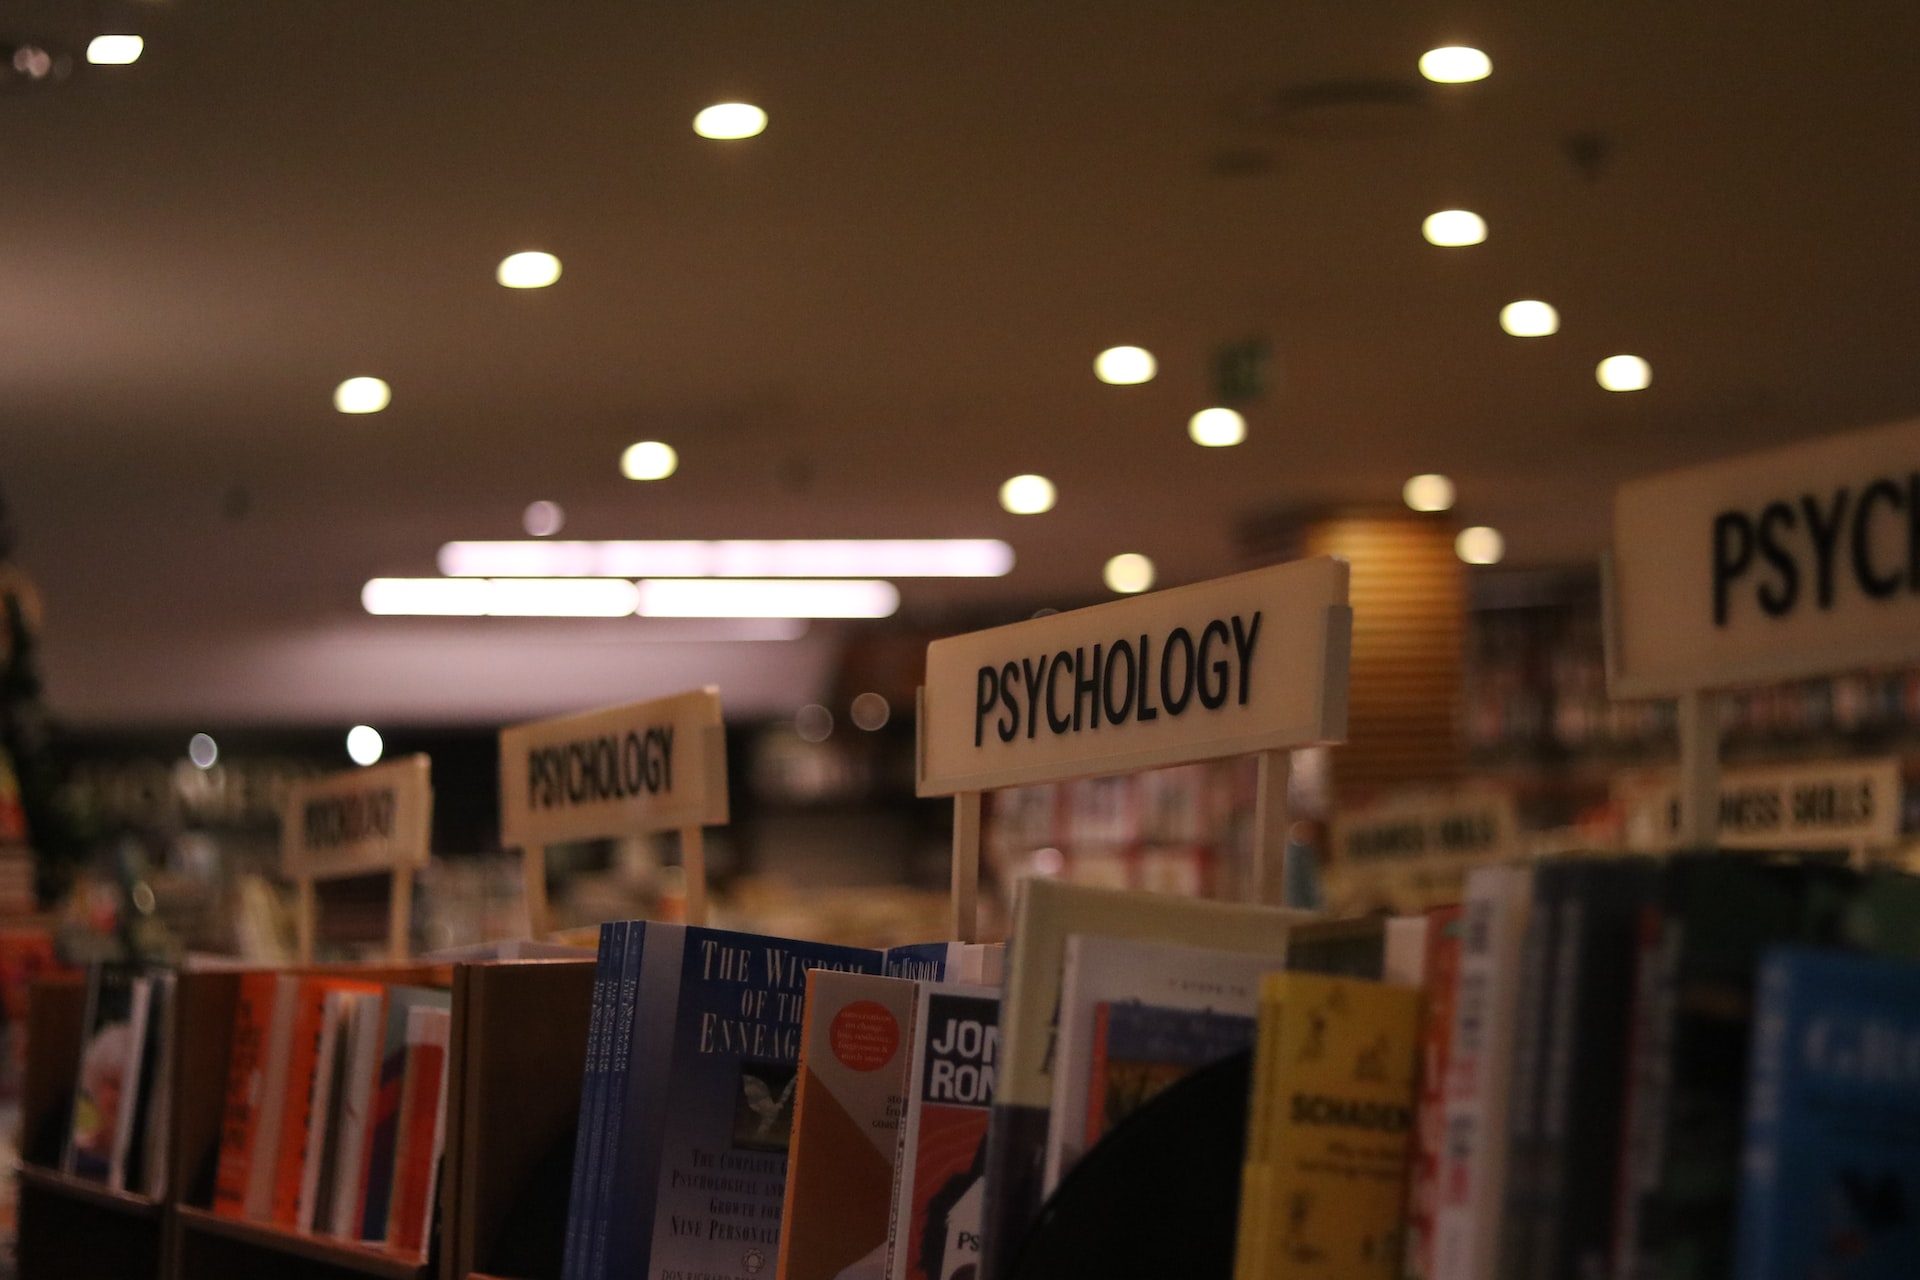 Psychology books on a shelf to become an aviation psychologist.